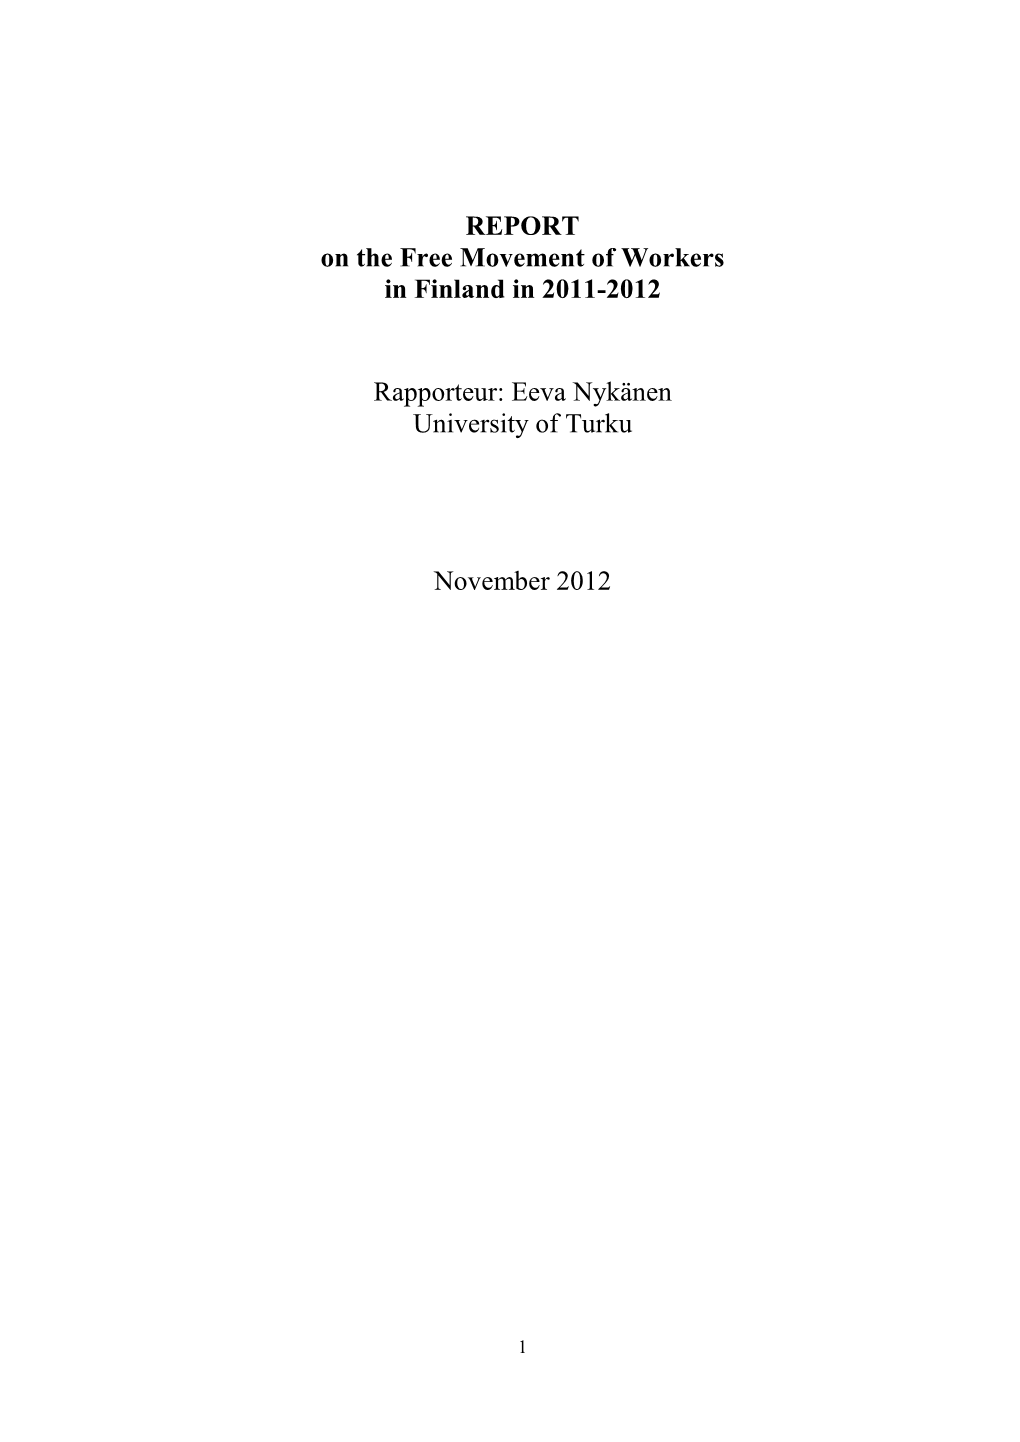 REPORT on the Free Movement of Workers in Finland in 2011-2012 Rapporteur: Eeva Nykänen University of Turku November 2012